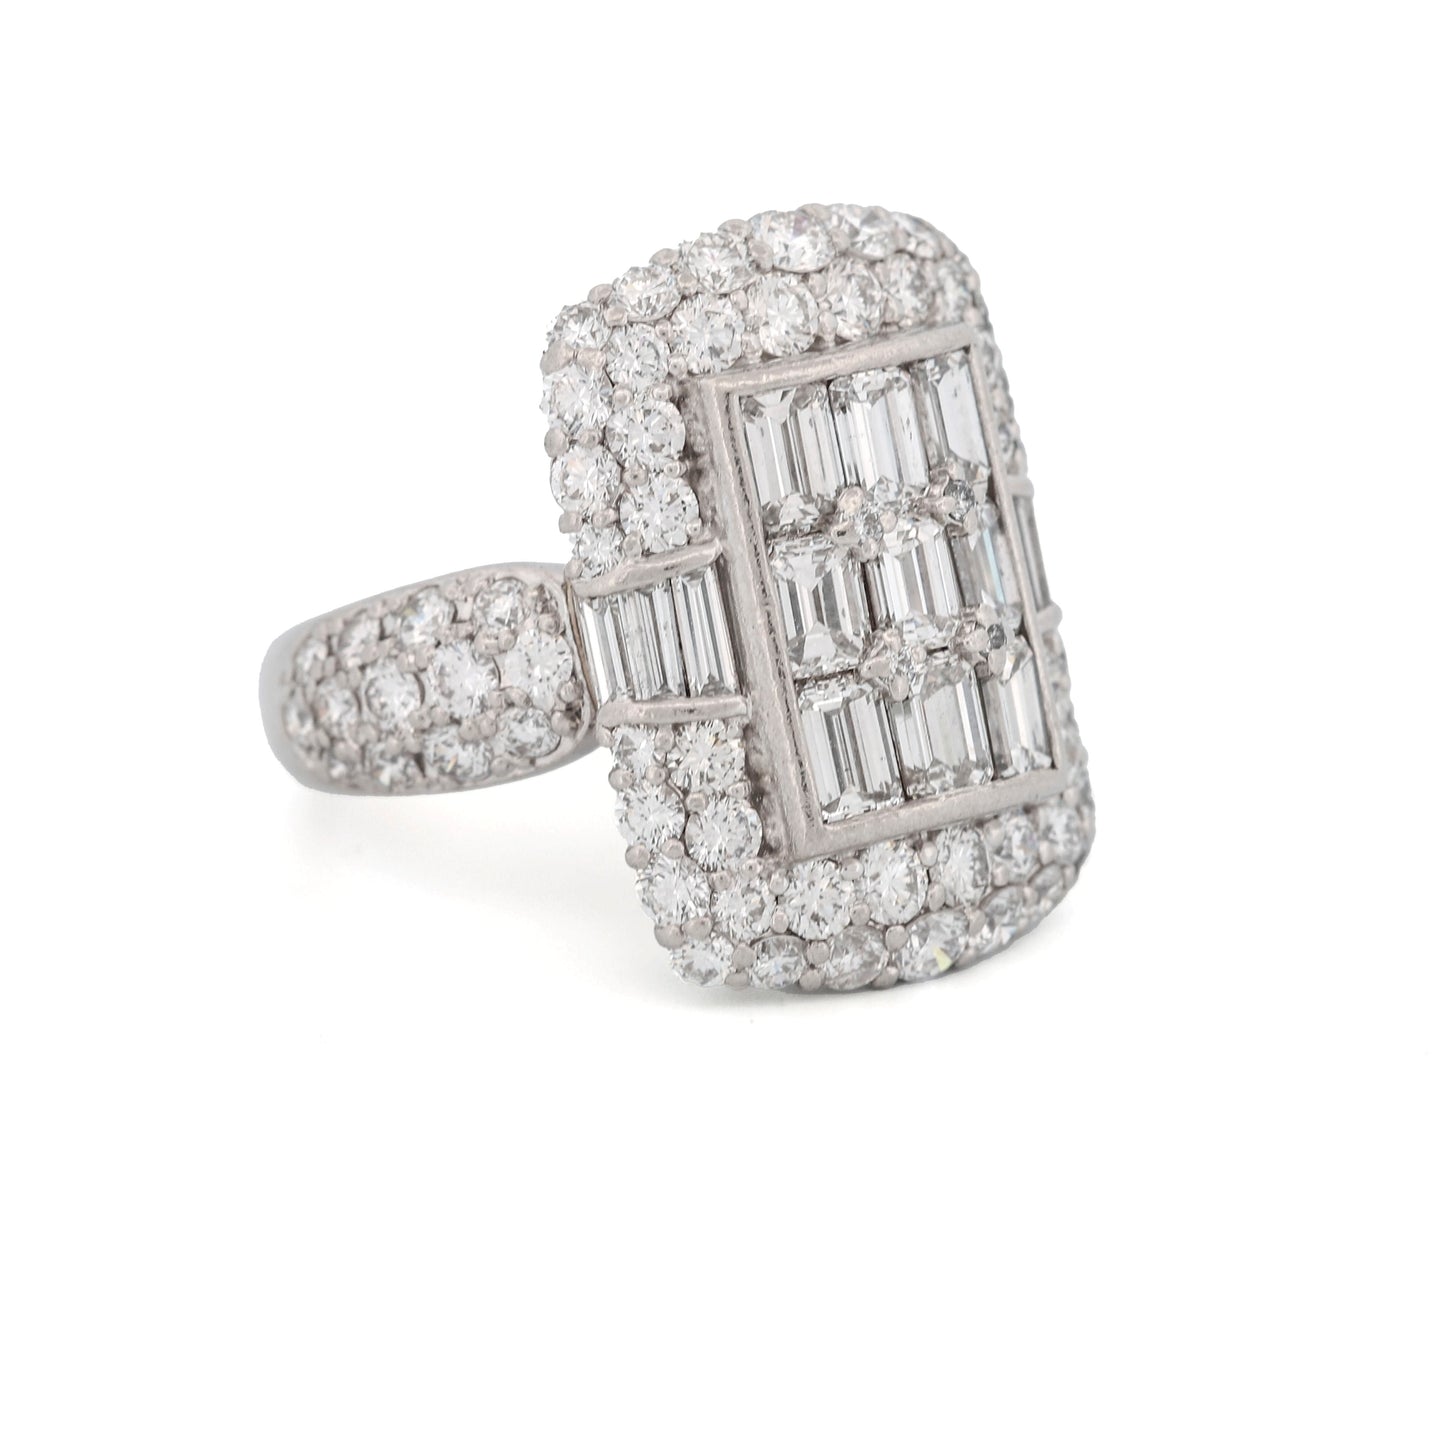 Stunning Diamond Statement Ring in Platinum - Retro Glamour - Size 7.5